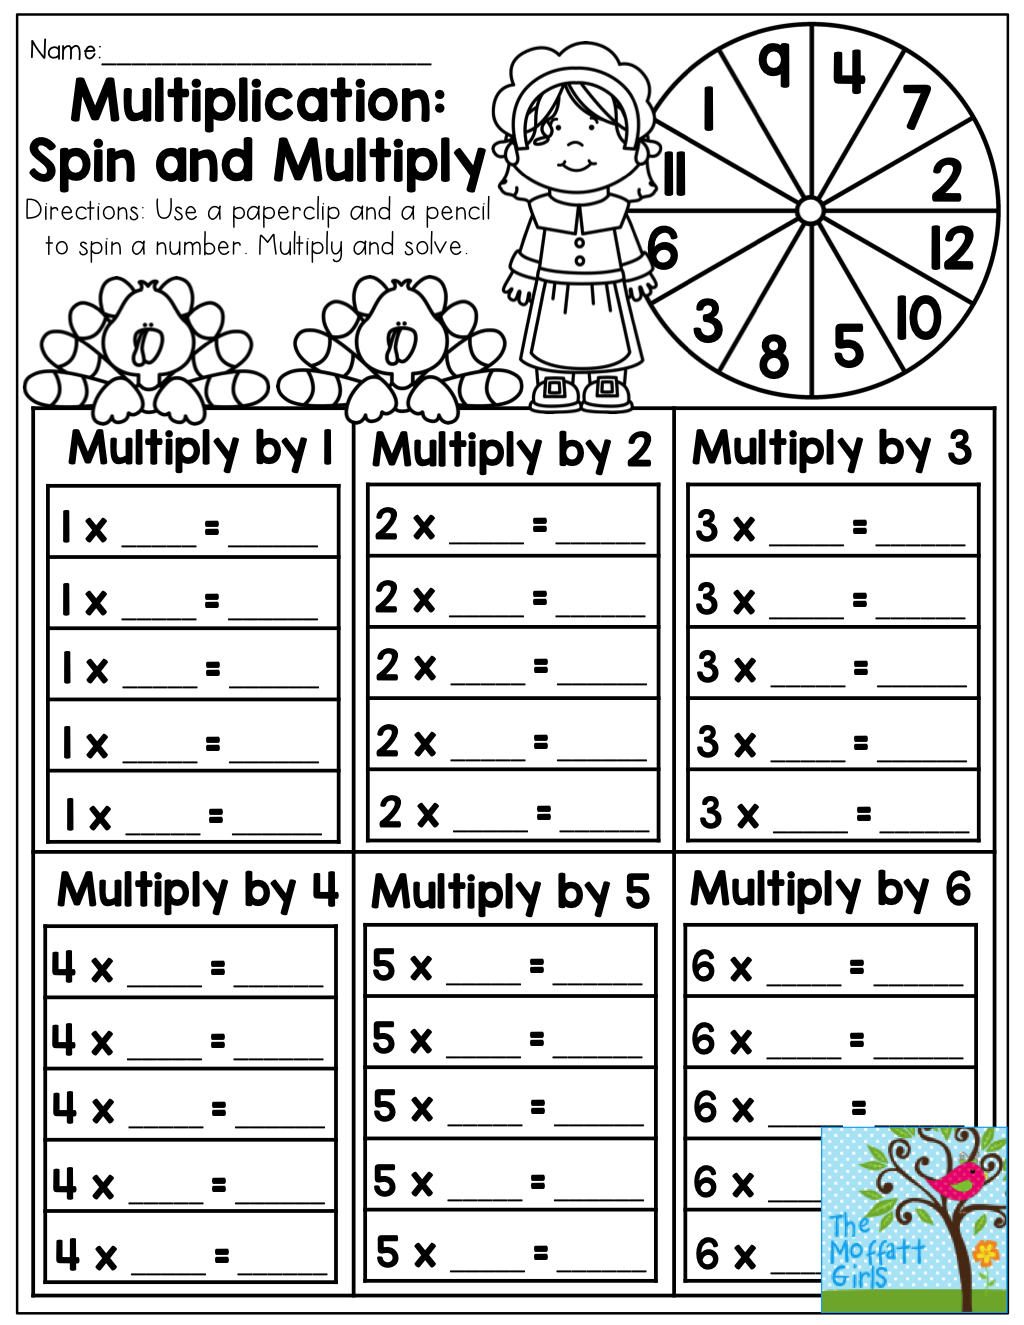 multiplication-worksheets-and-games-printablemultiplication